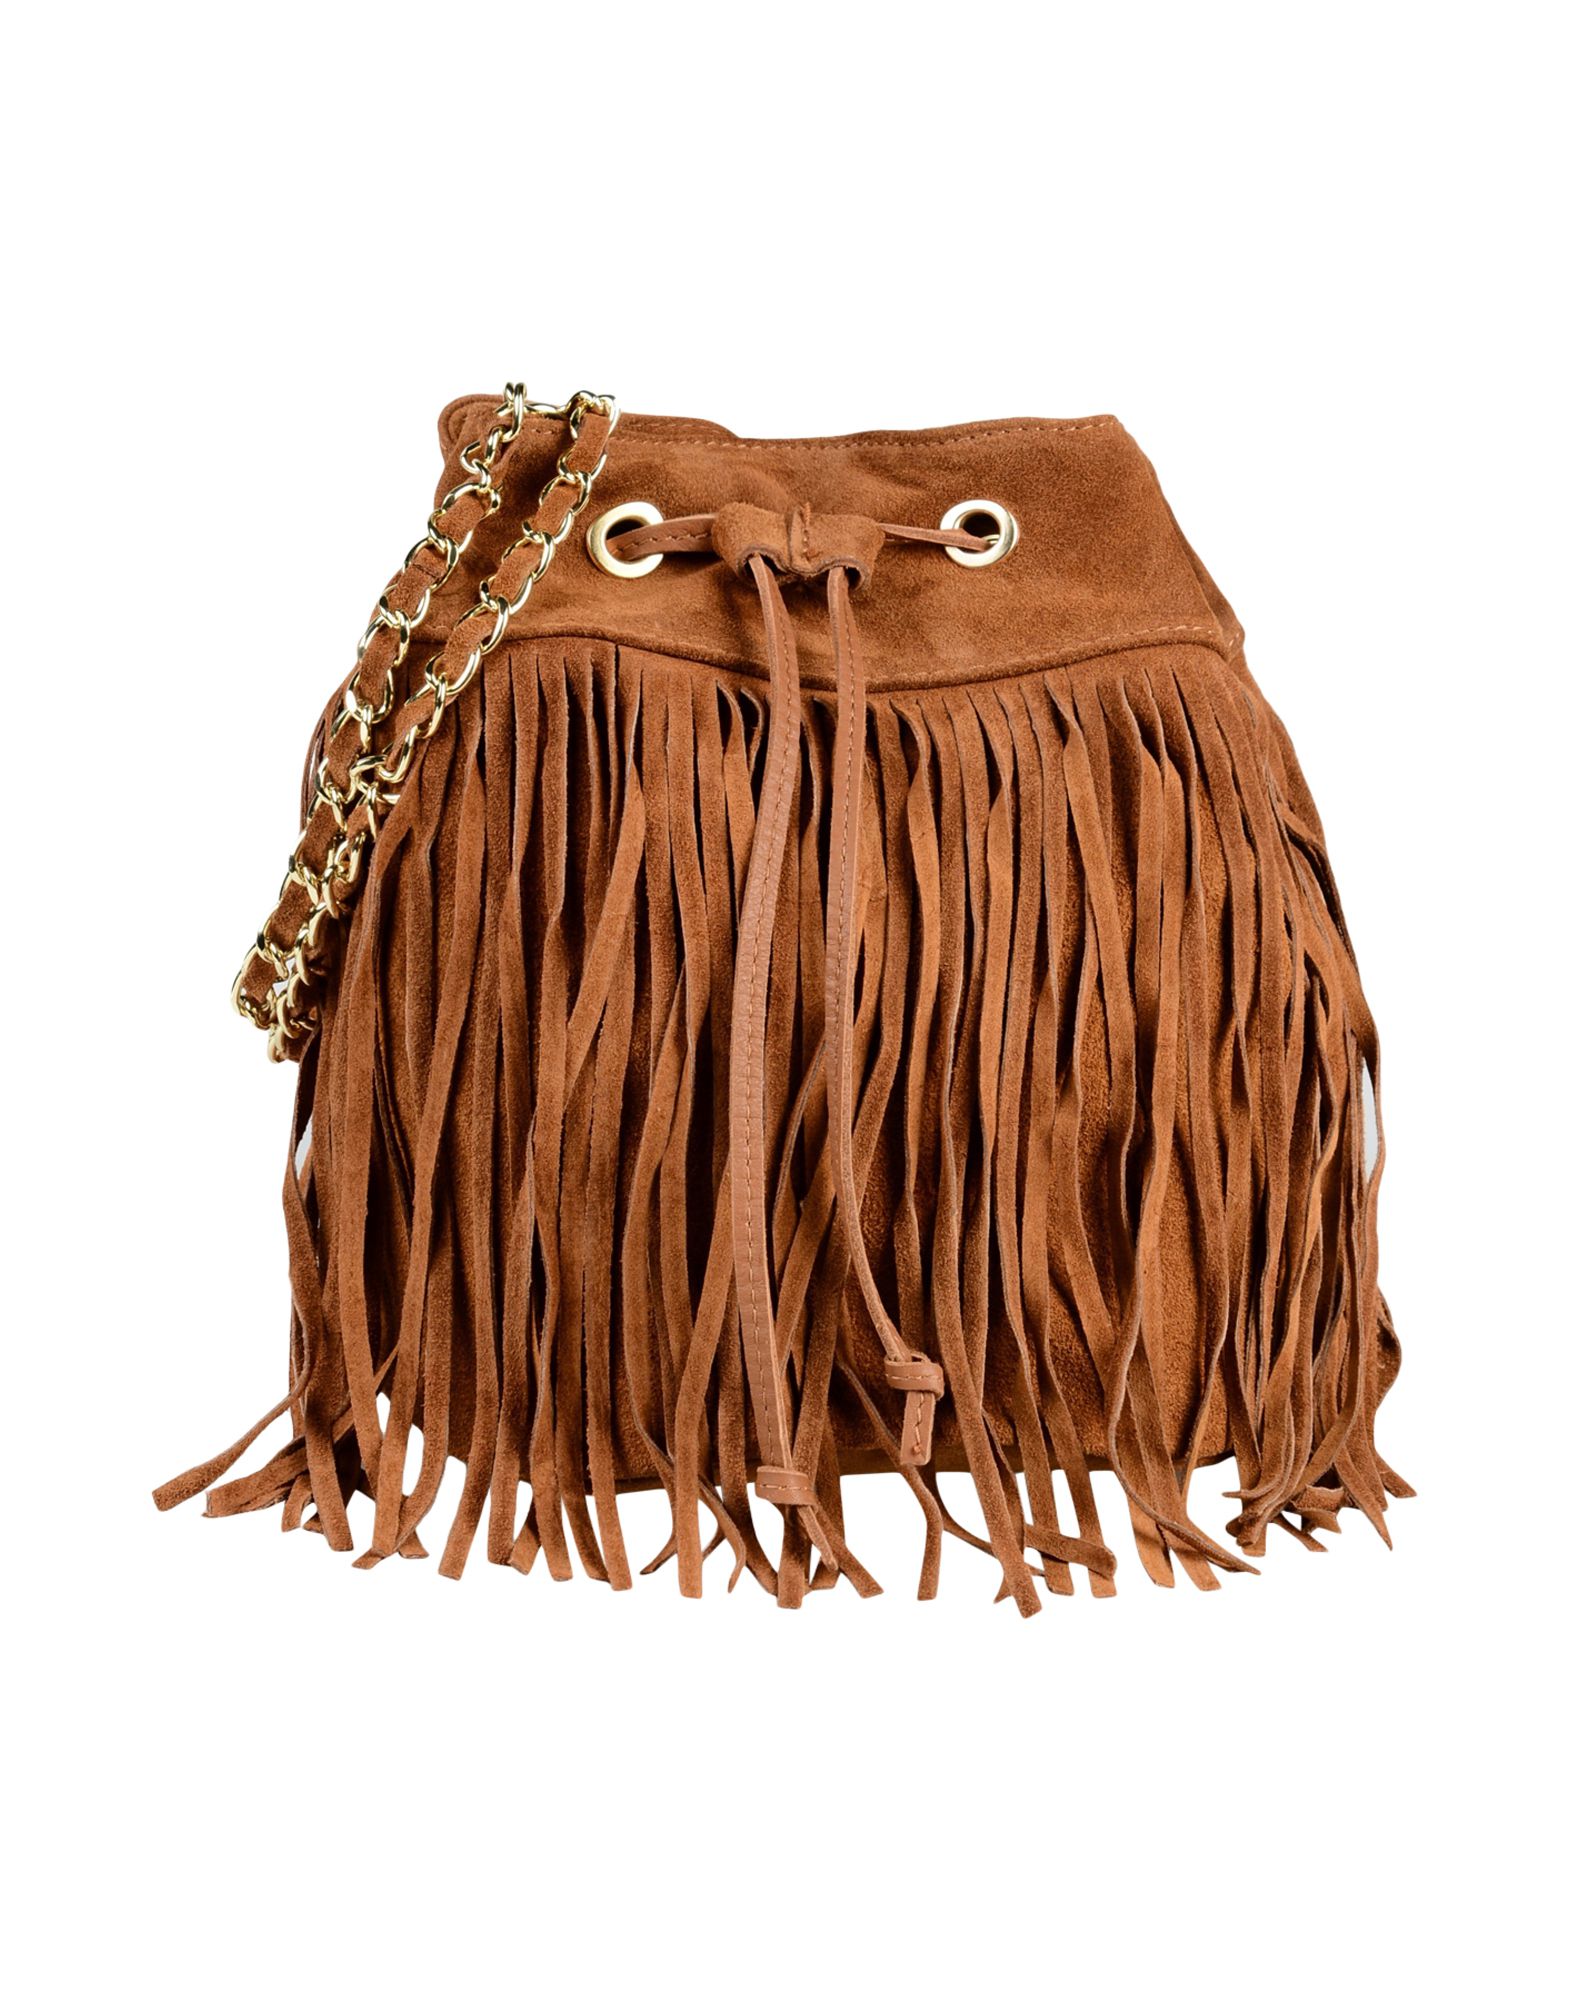 Women\u0026#39;s shoulder bags online: designer bags in leather and silk ...